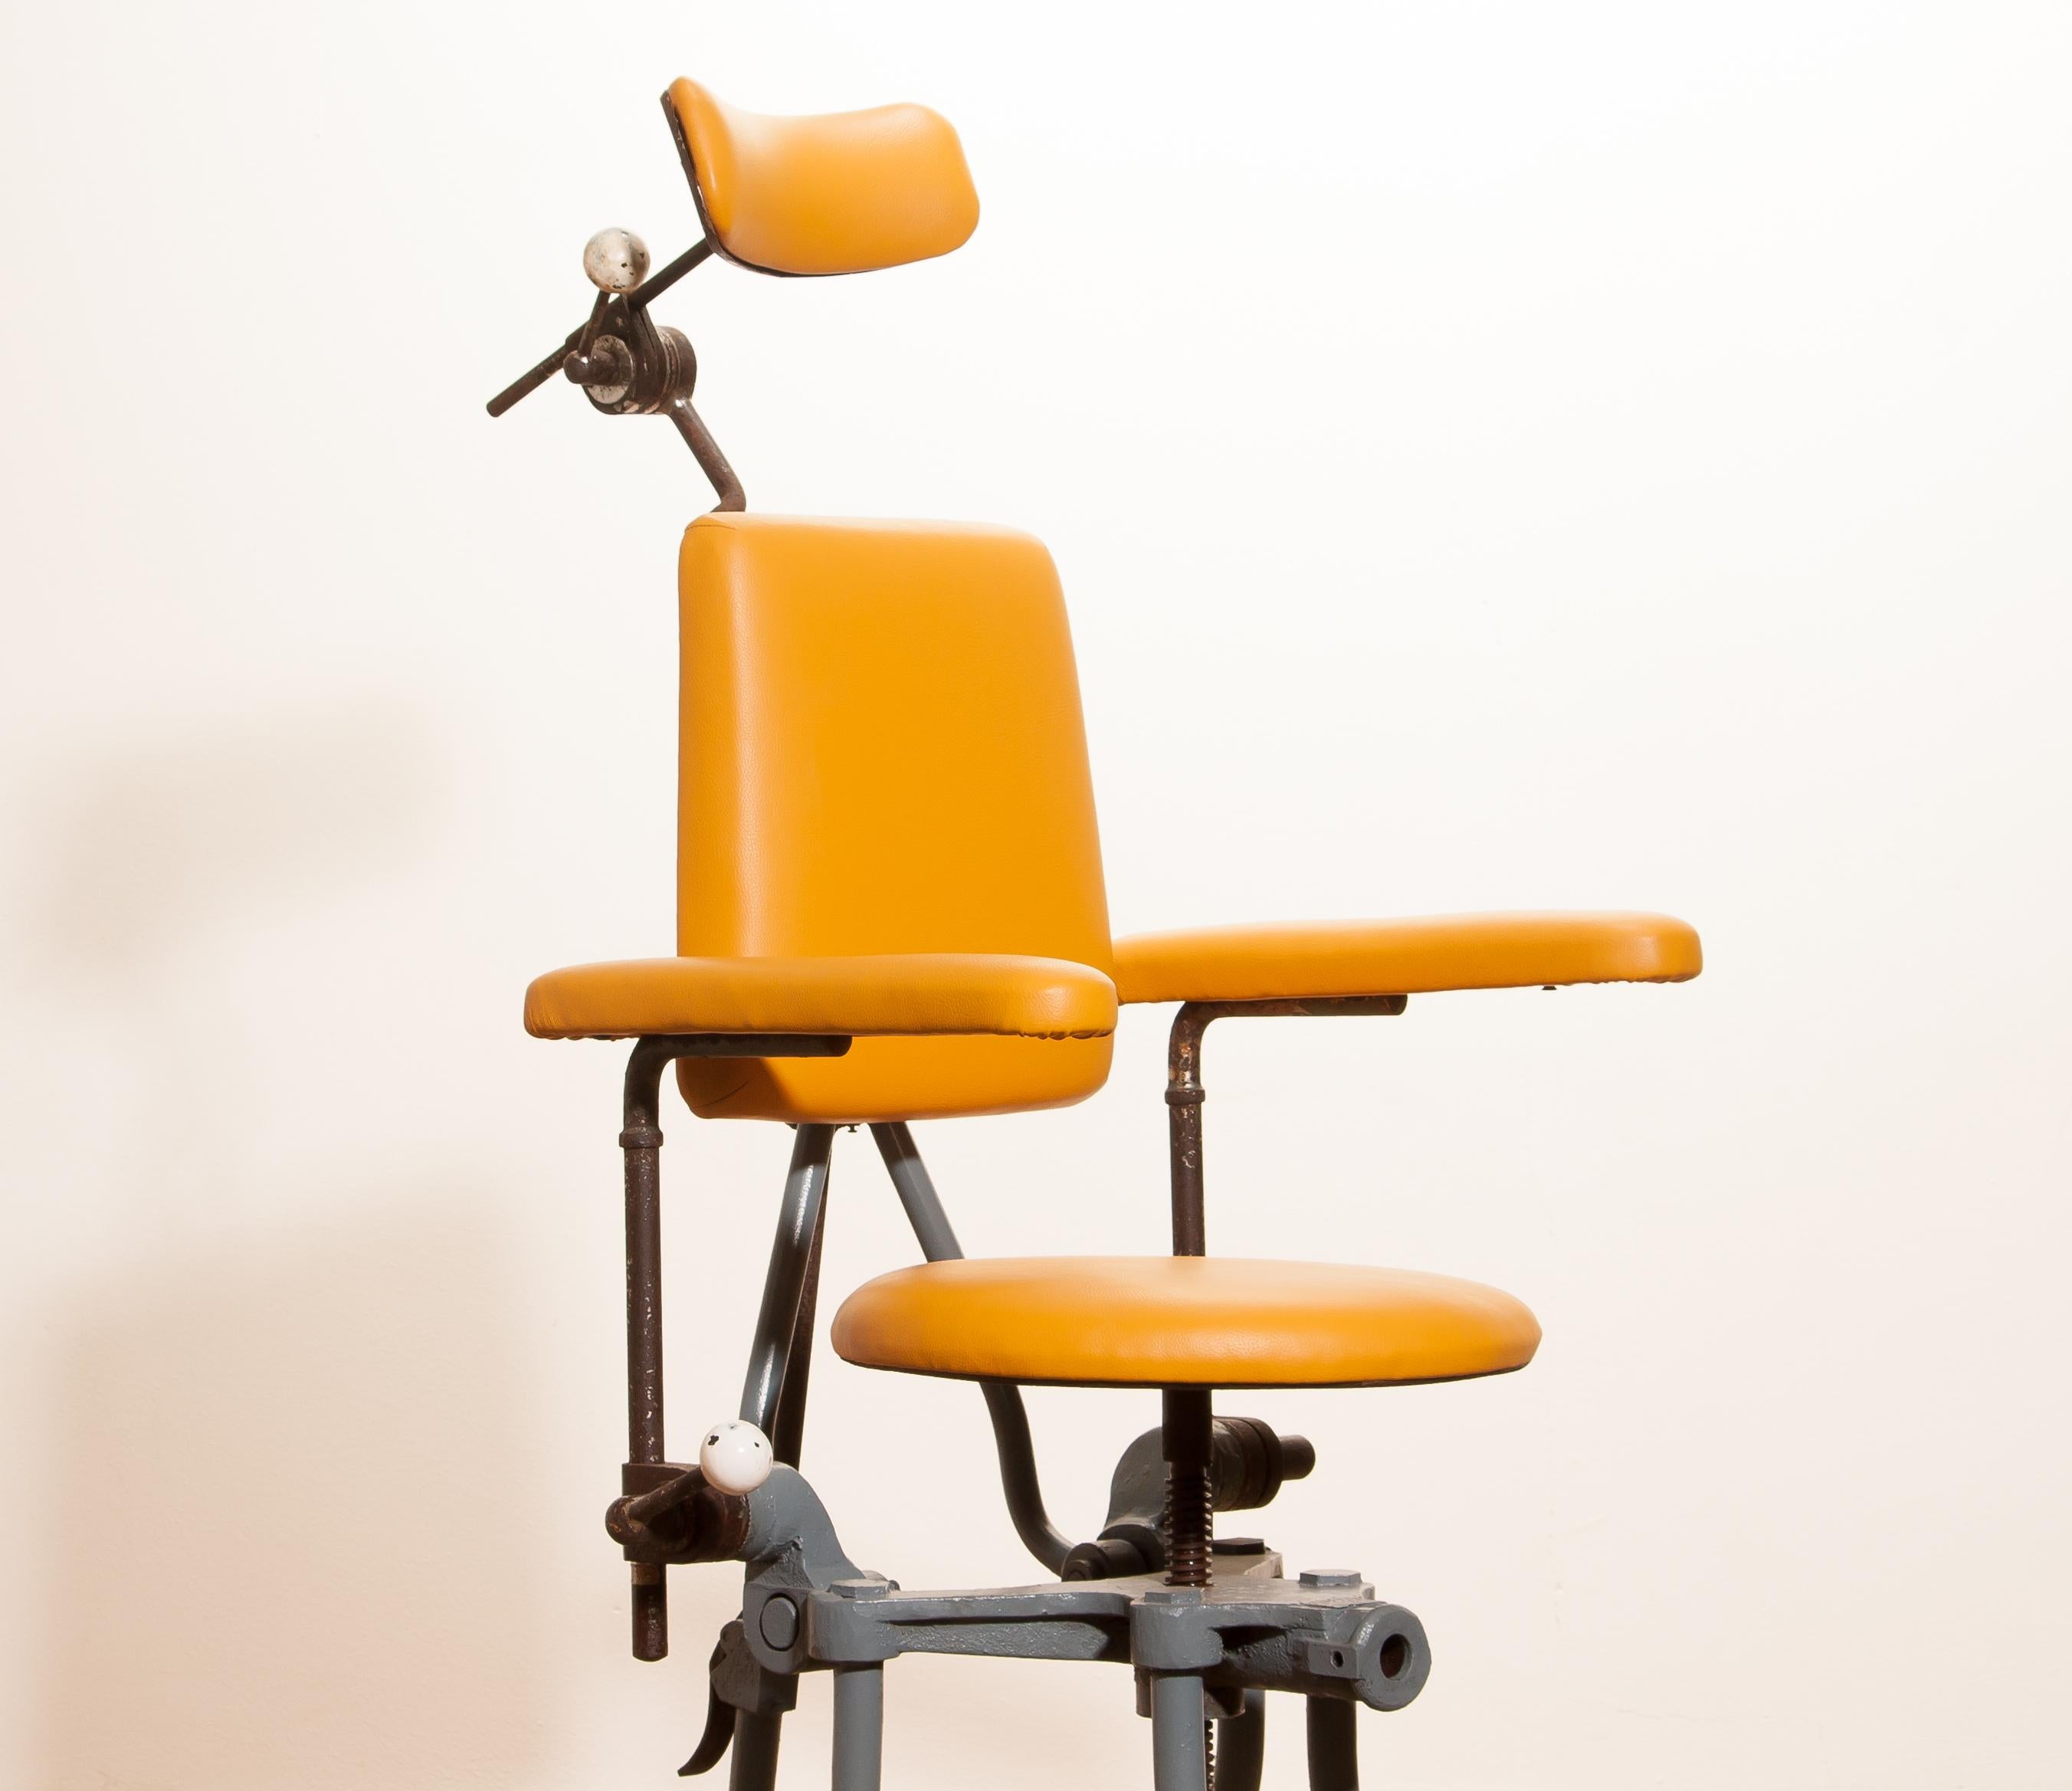 1930s, Steel Medical or Dentist Chair 3